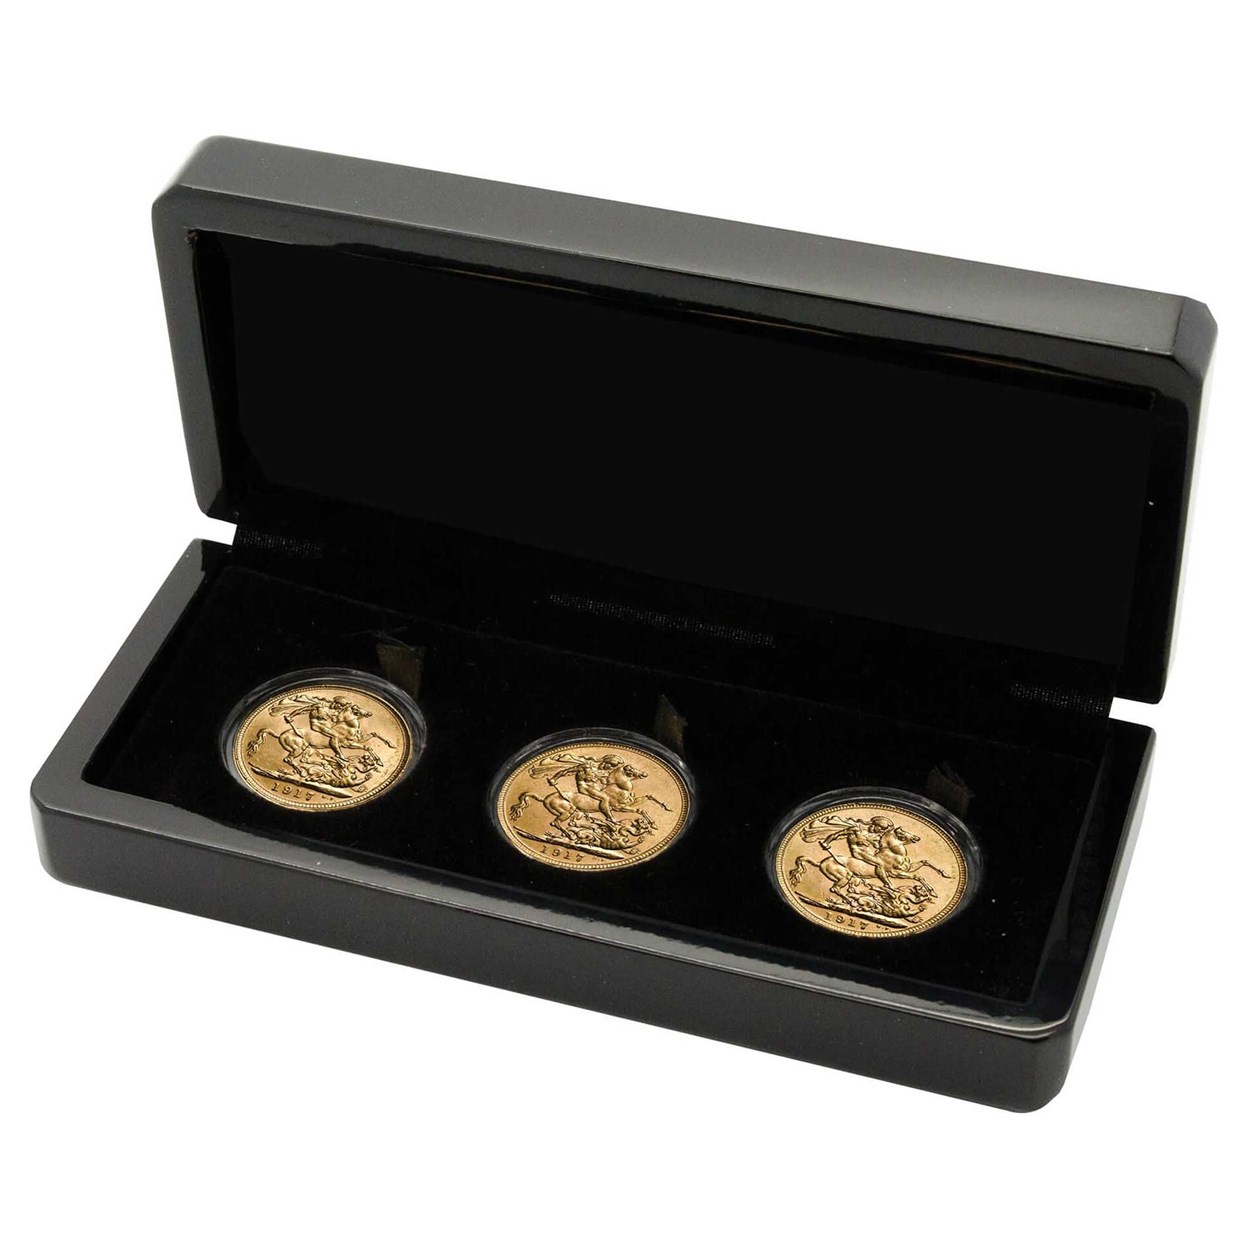 02 1916 king george v gold sovereign mintmark trio 2016 gold StraightOn